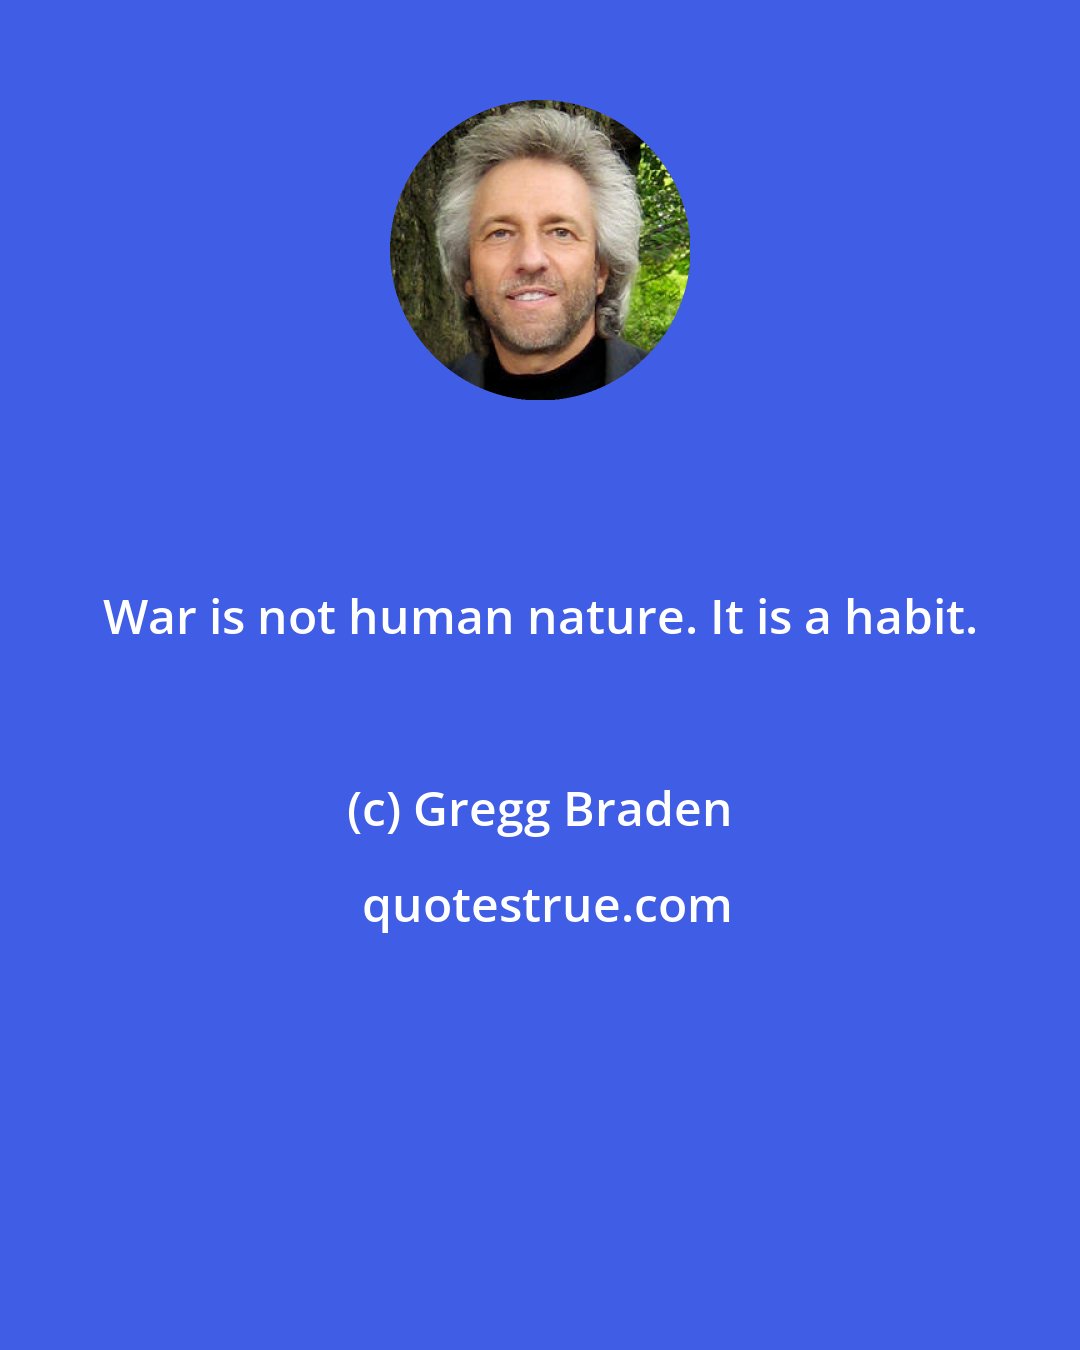 Gregg Braden: War is not human nature. It is a habit.